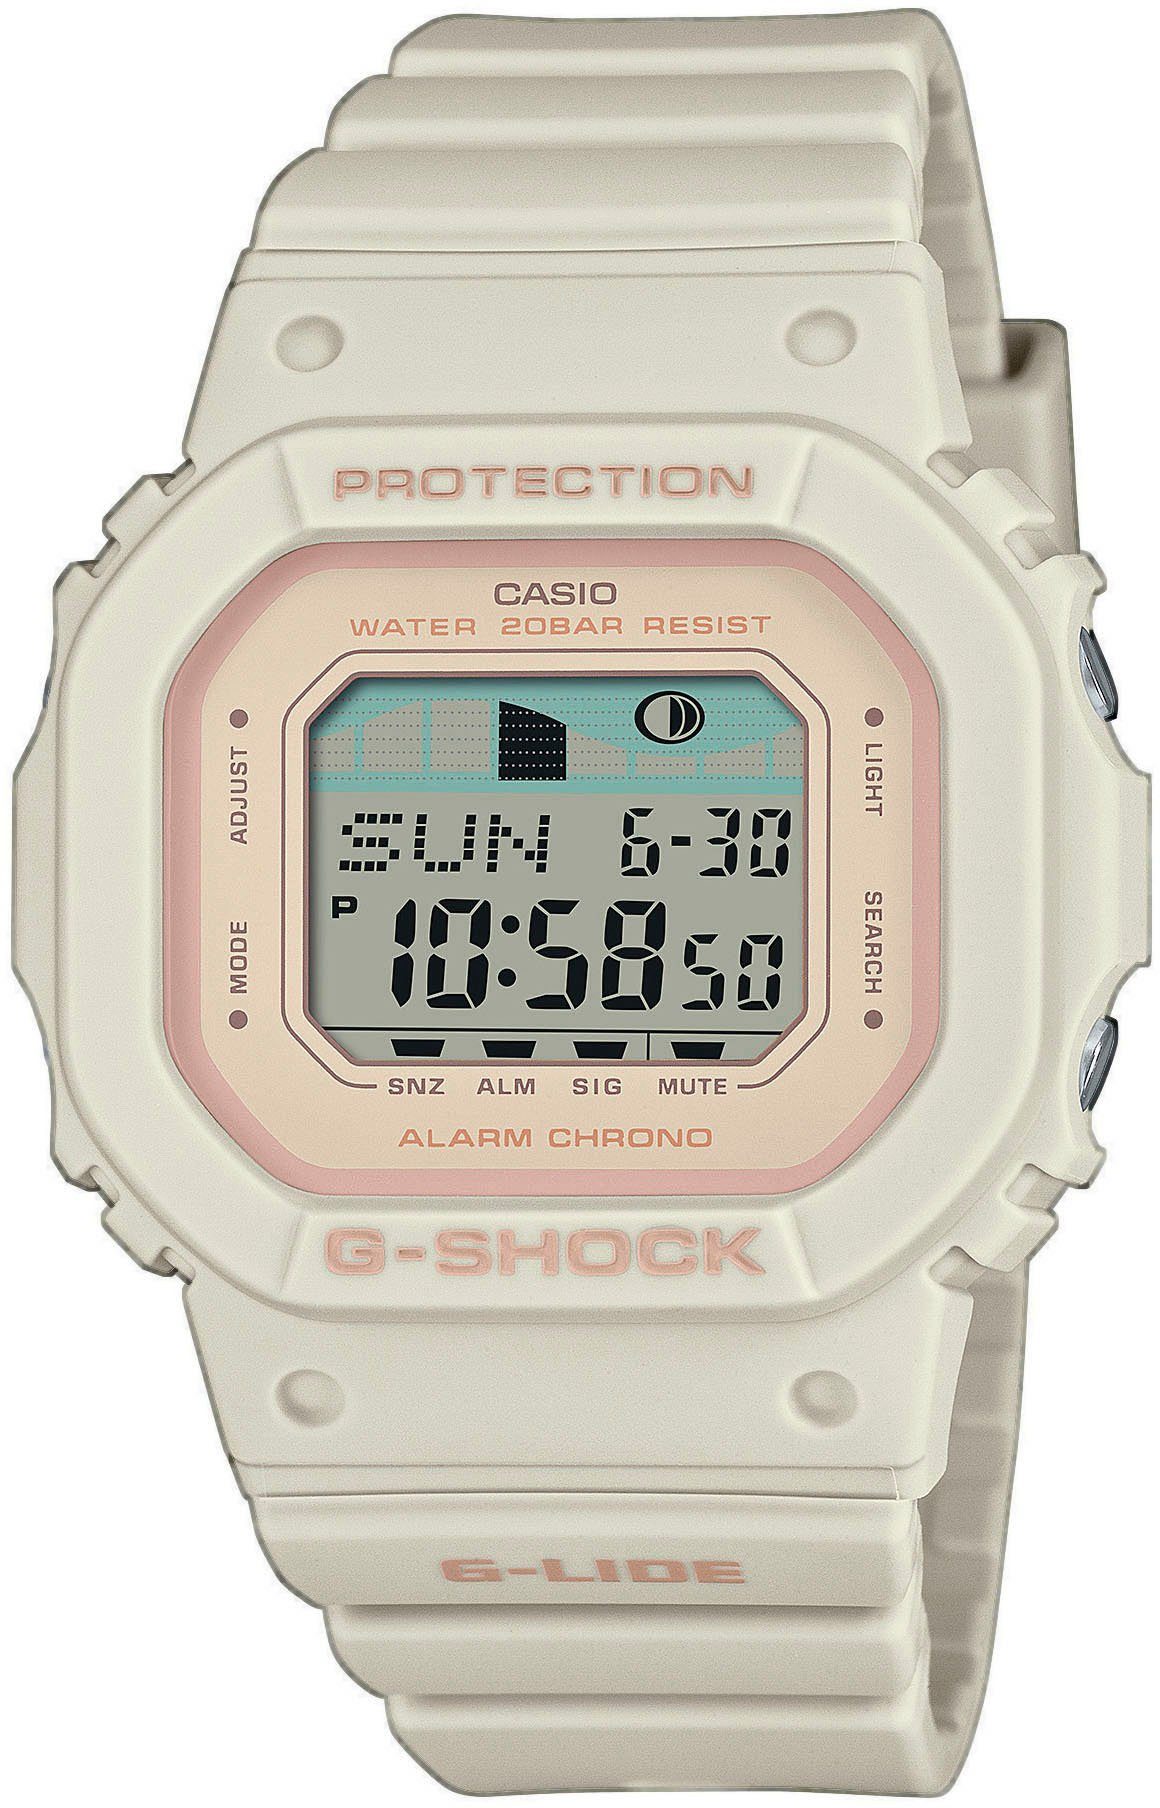 Chronograph G-SHOCK CASIO GLX-S5600-7ER